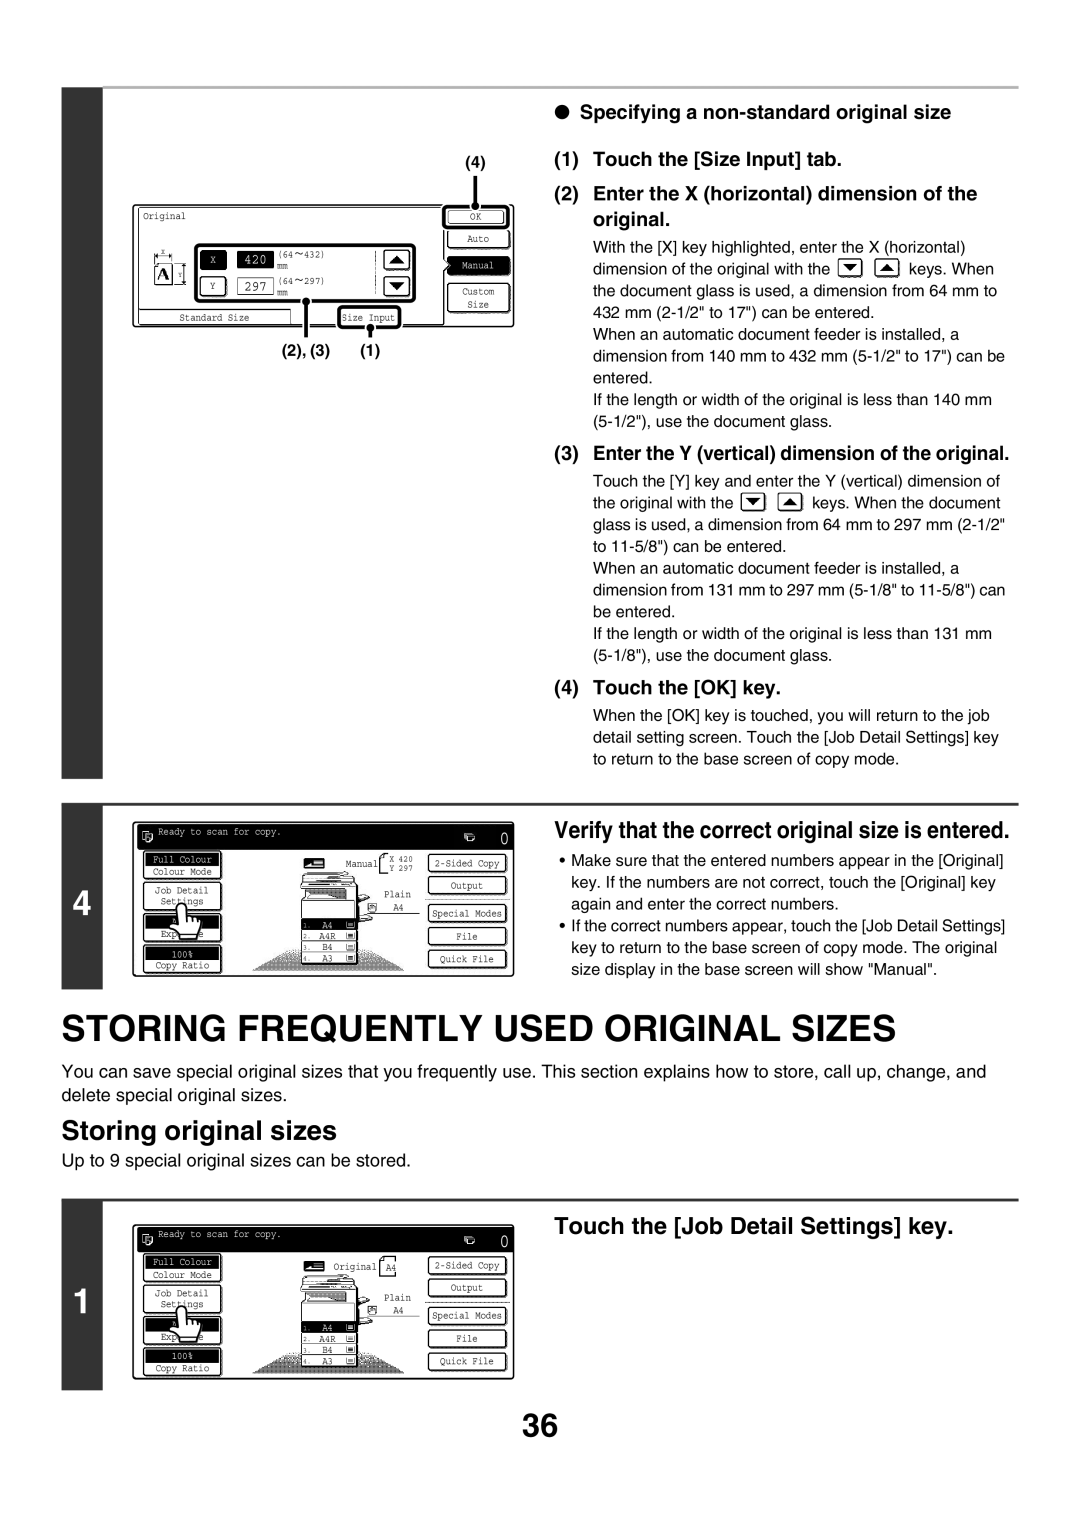 Sharp MX-2700G Storing Frequently Used Original Sizes, Storing original sizes, Specifying a non-standard original size 